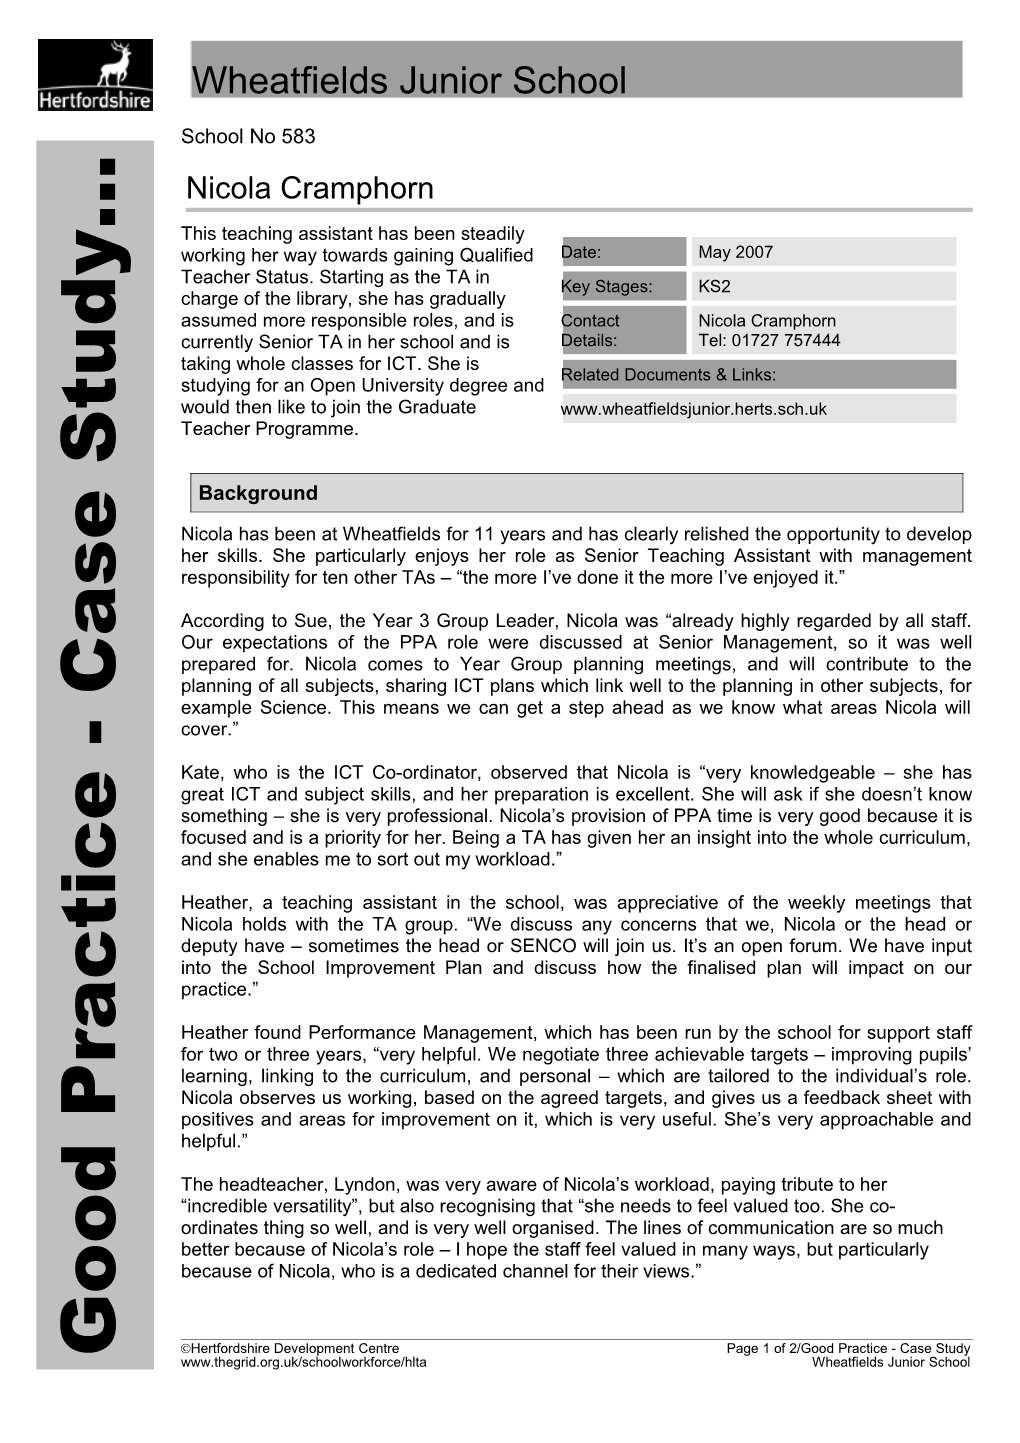 Good Practice - Case Study V97 (1.0) Jun 2004